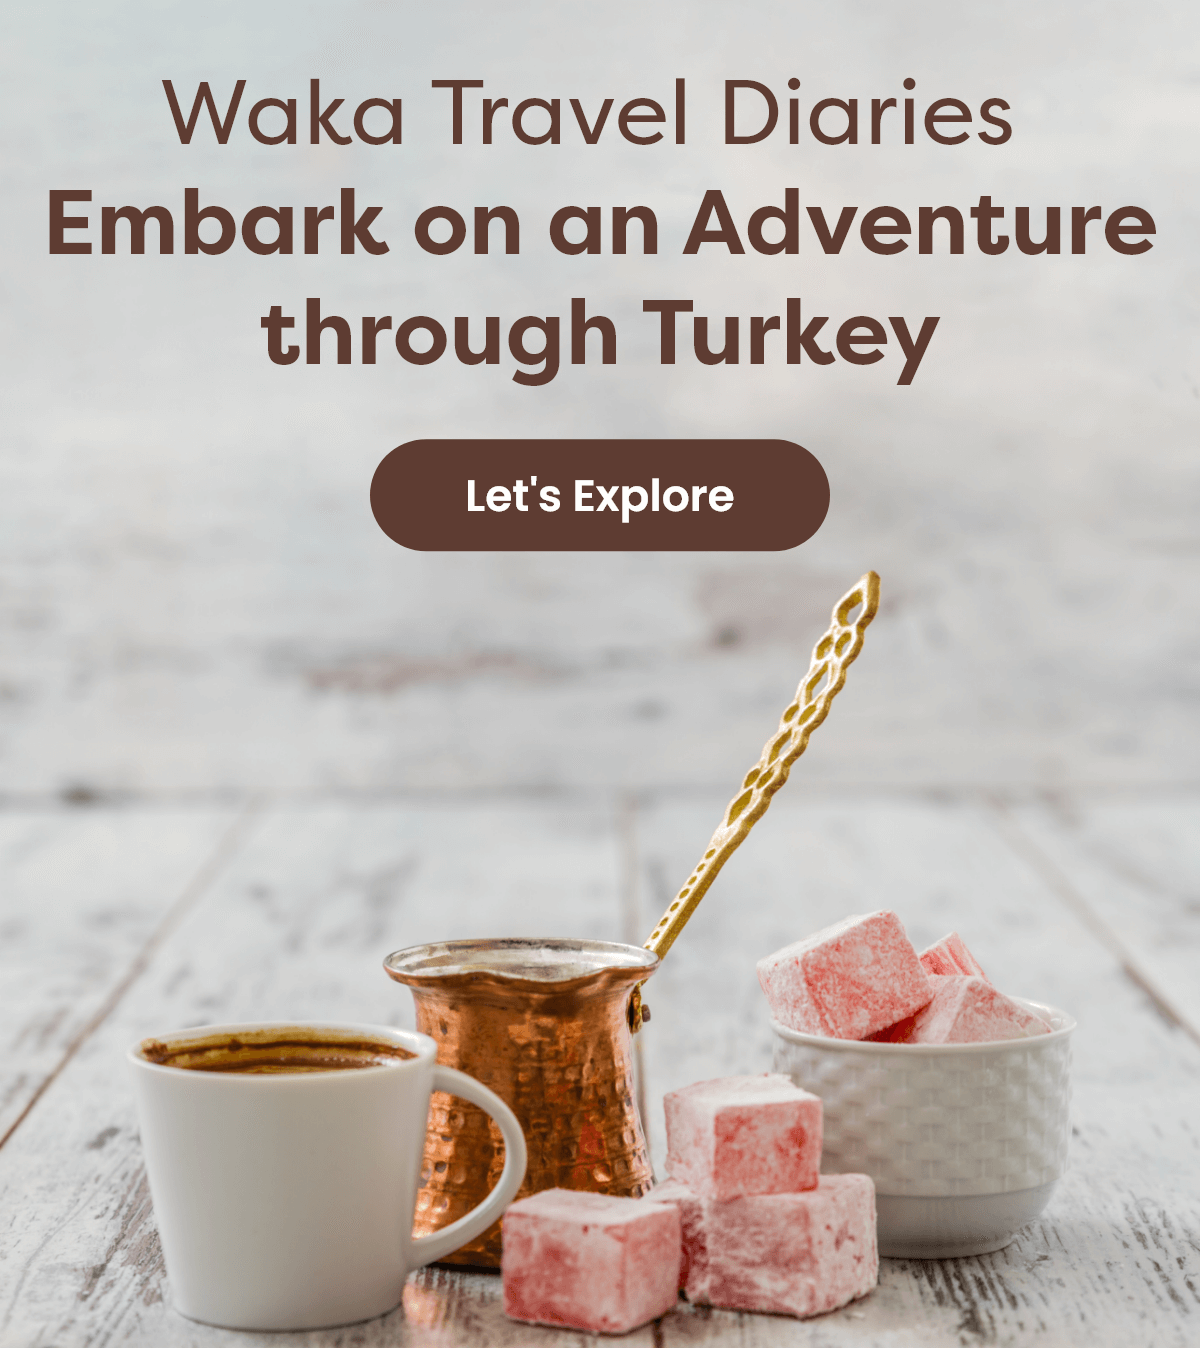 Waka Travel Diaries: Embark on an Adventure through Turkey [Let's Explore]